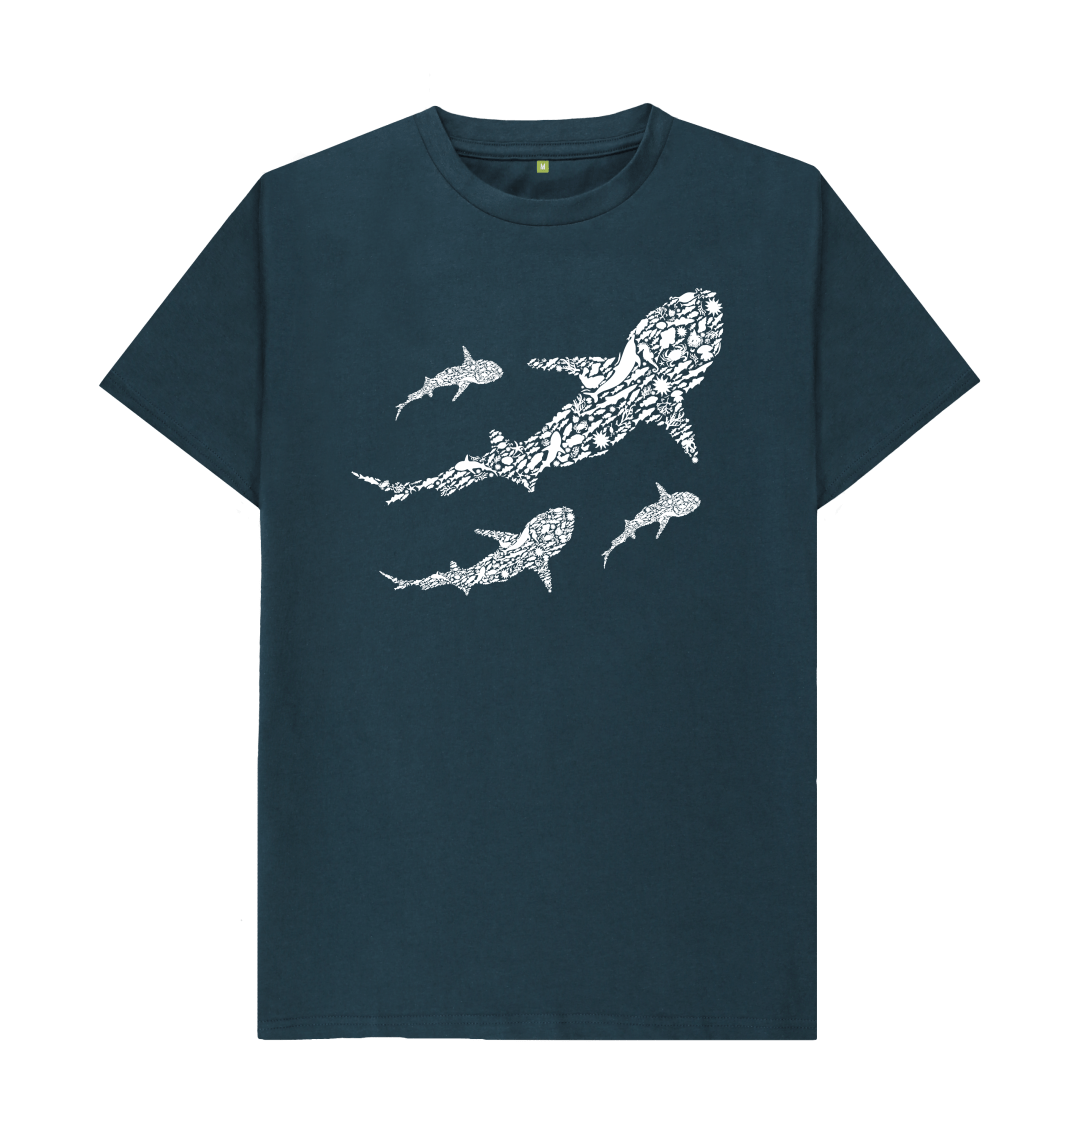 Men's Save Our Seas T - Shirt - Printed T - shirt